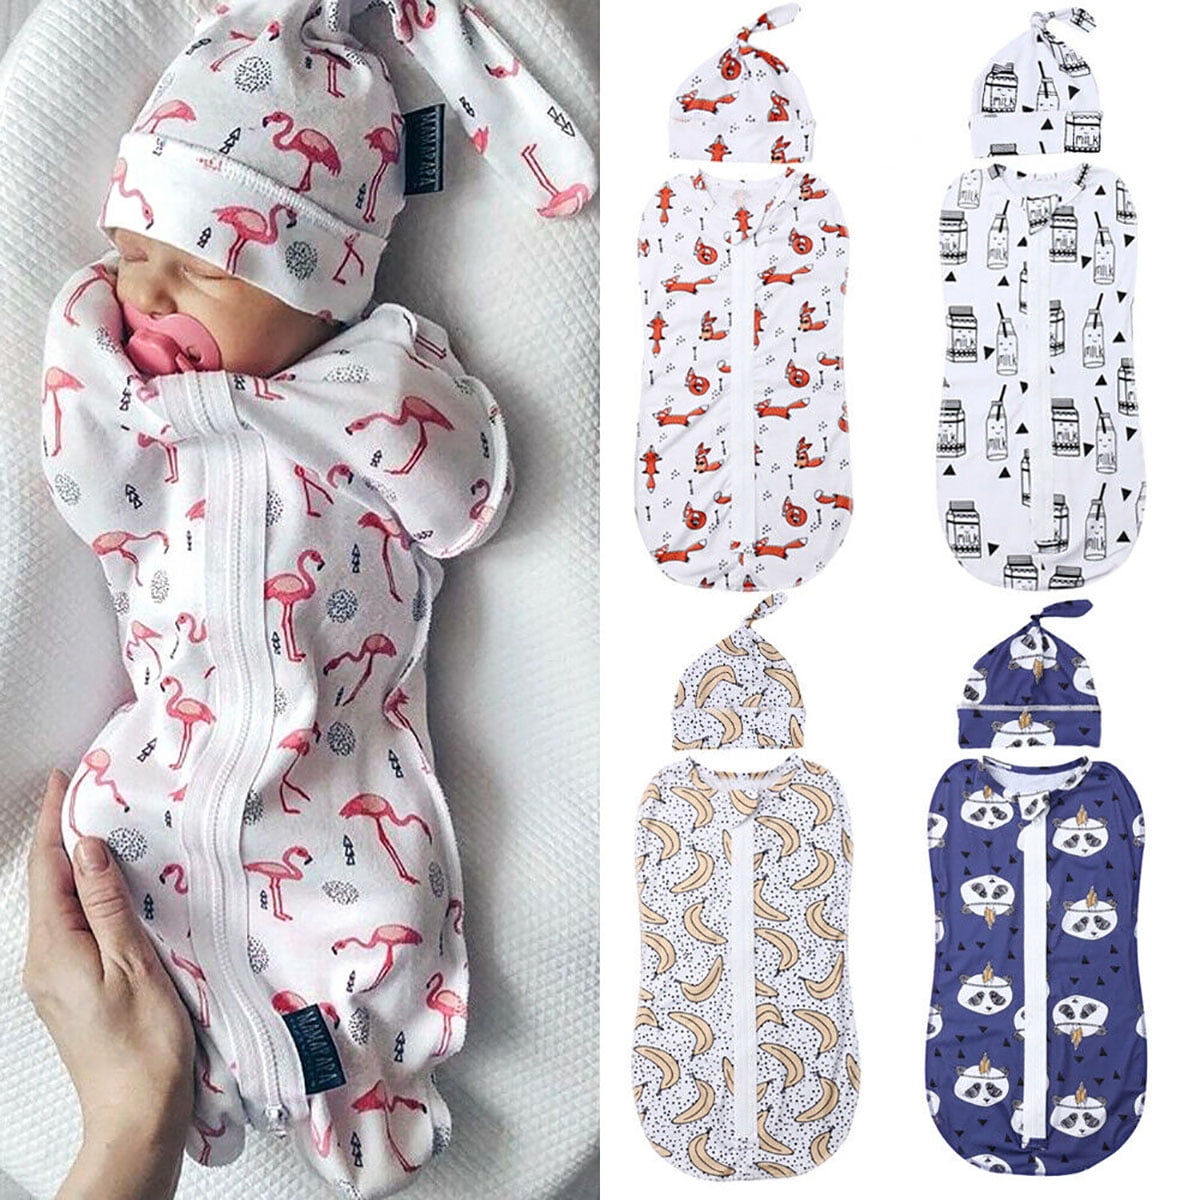 Cotton  SWADDLE WRAP BLANKET NEWBORN BABY INFANT PRAM DUVET SLEEPING BAG 